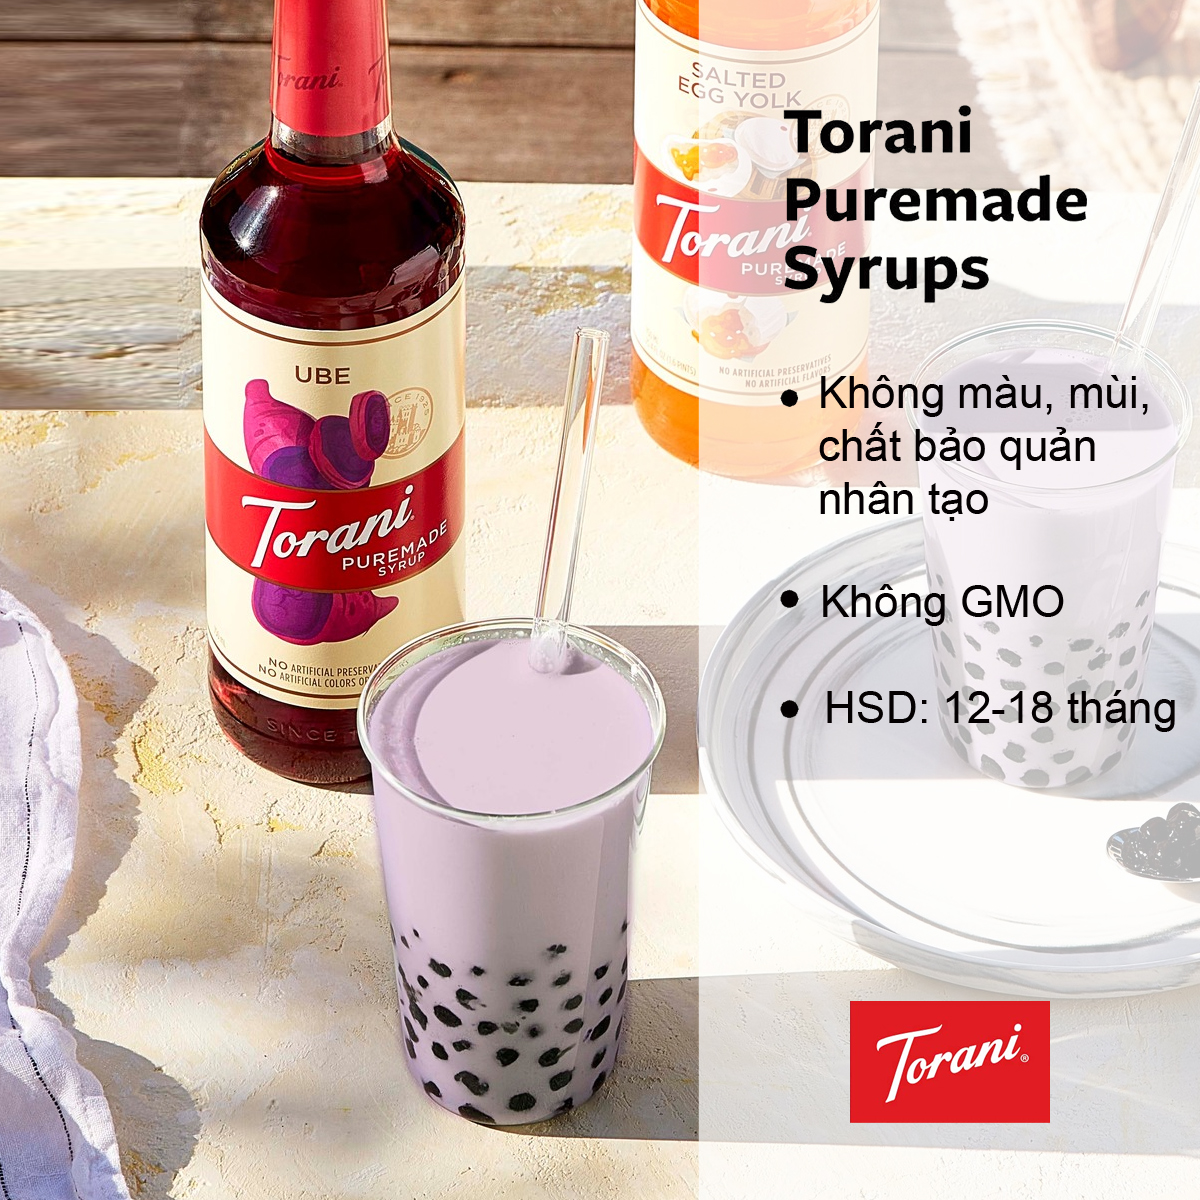 Torani Puremade Siro Pha Chế Khoai Lang Tím Ube Syrup 750ml Mỹ